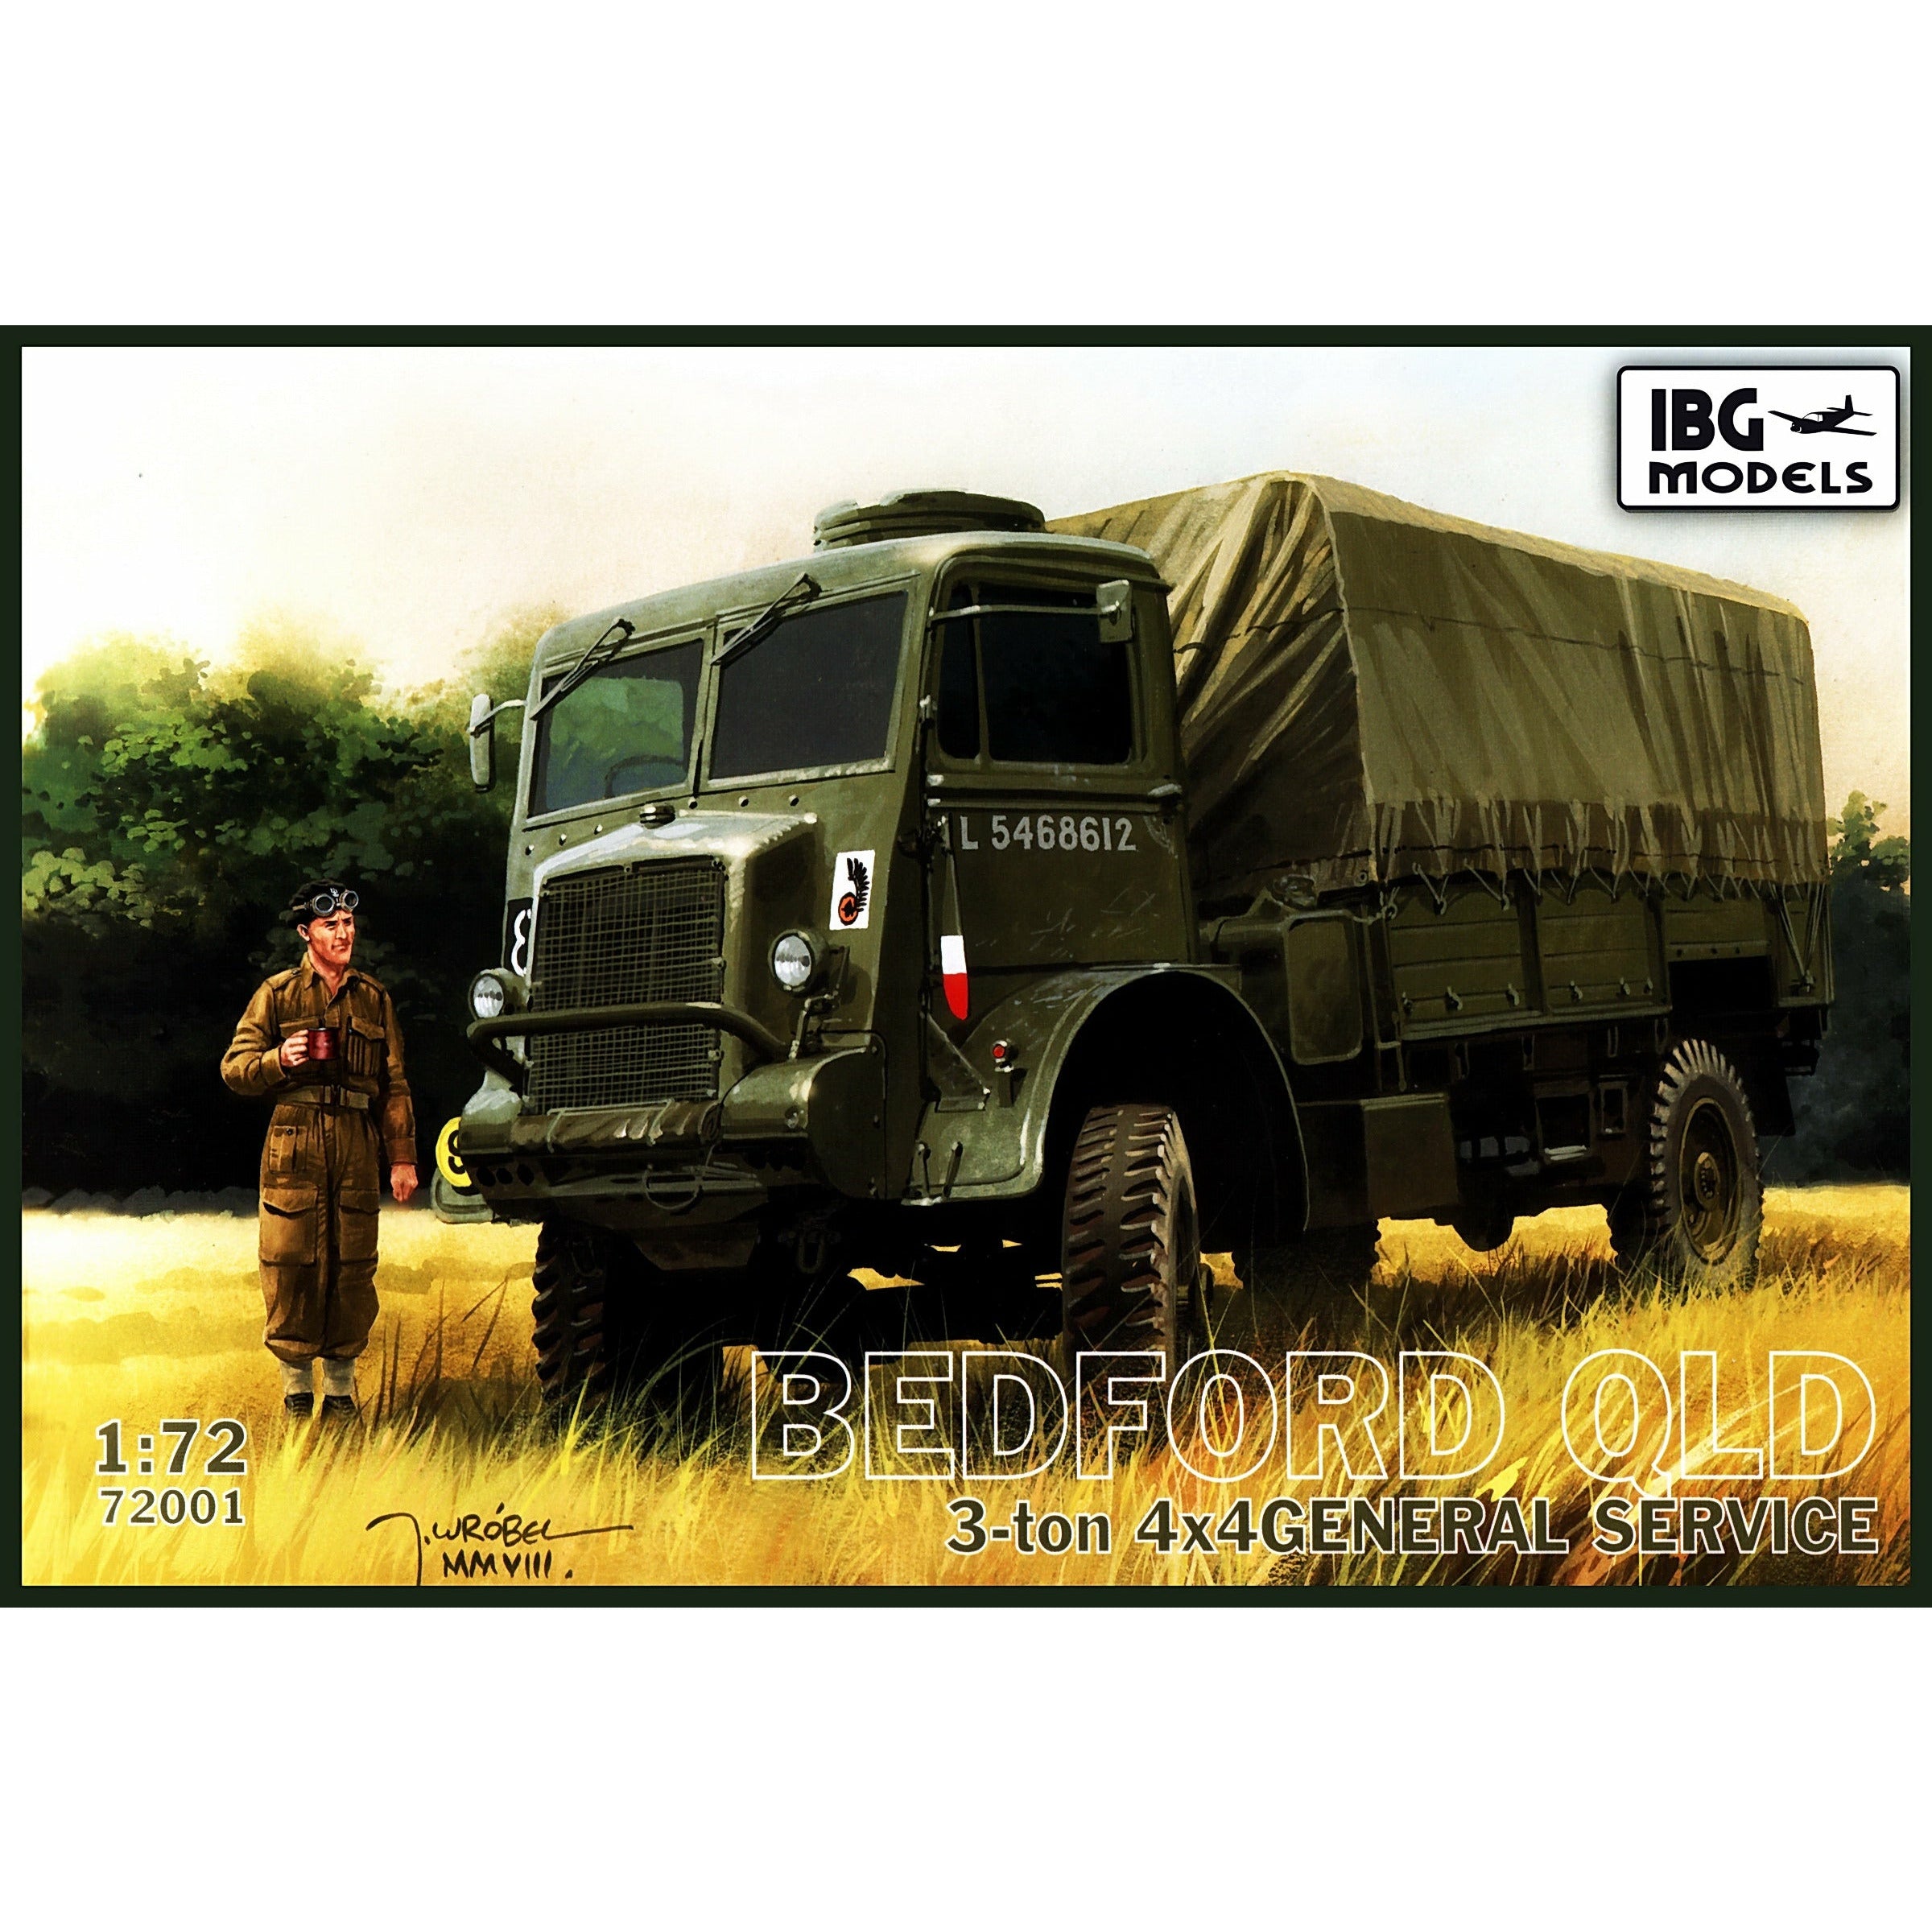 Bedford QLD 3 ton 4x4 General Service 1/72 #72001 by IBG Models